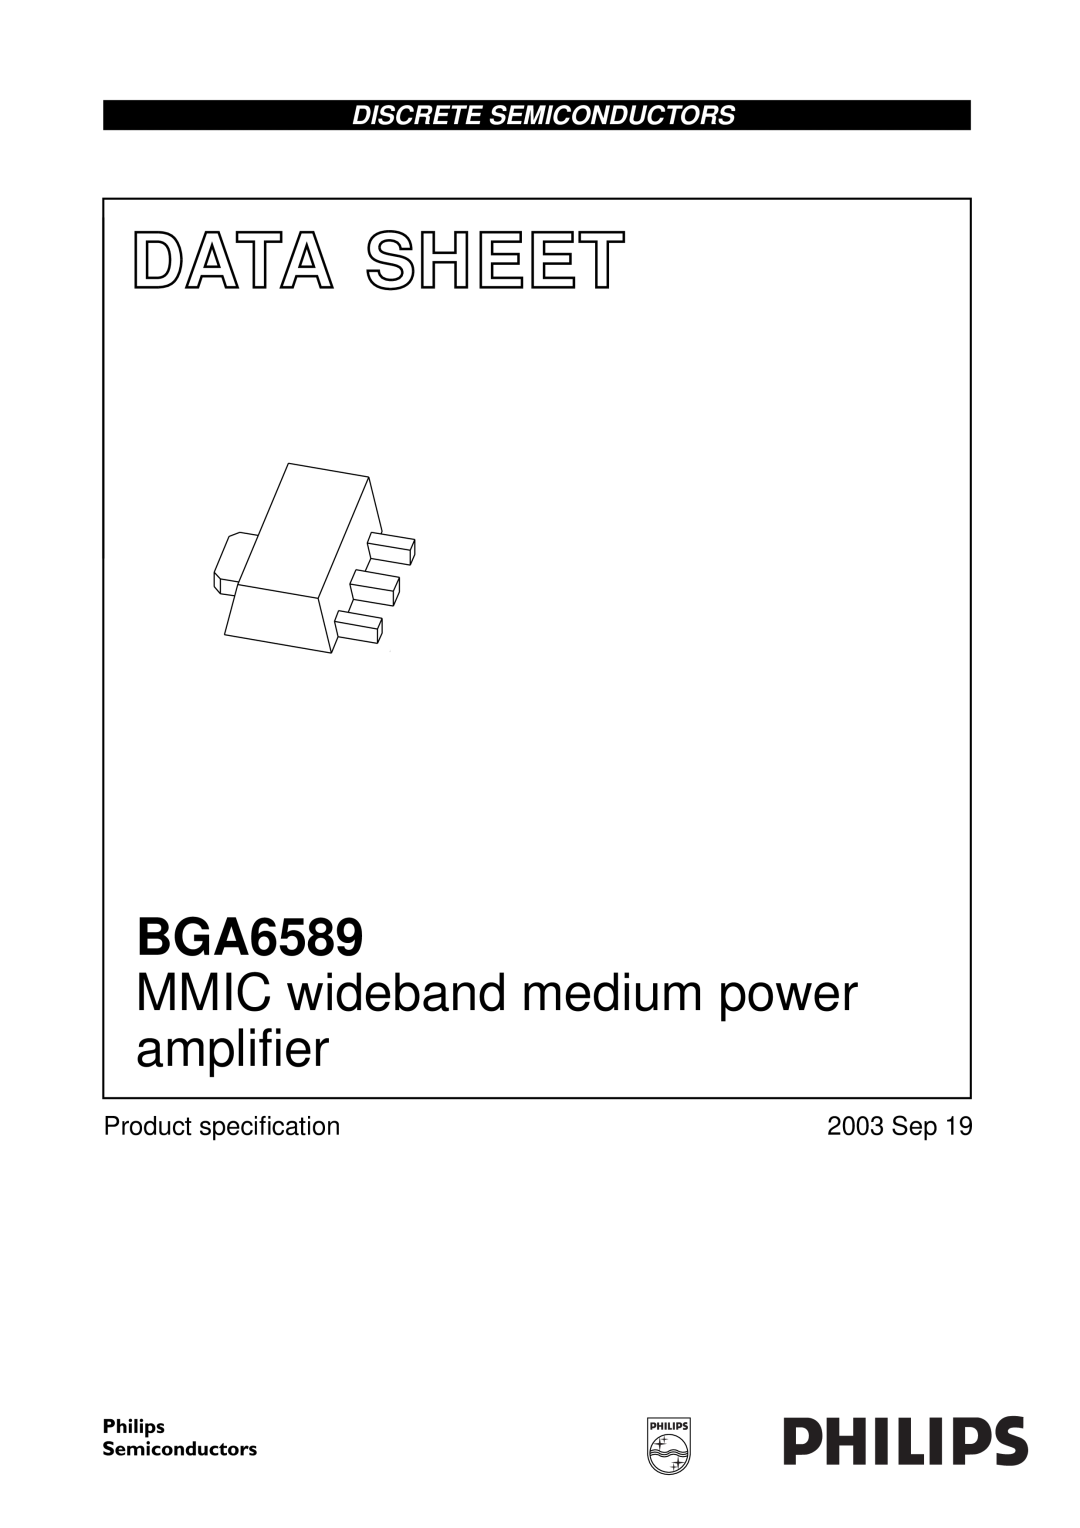 Philips BGA6589 manual Product speciﬁcation, Data Sheet, MMIC wideband medium power amplifier, Discrete Semiconductors 